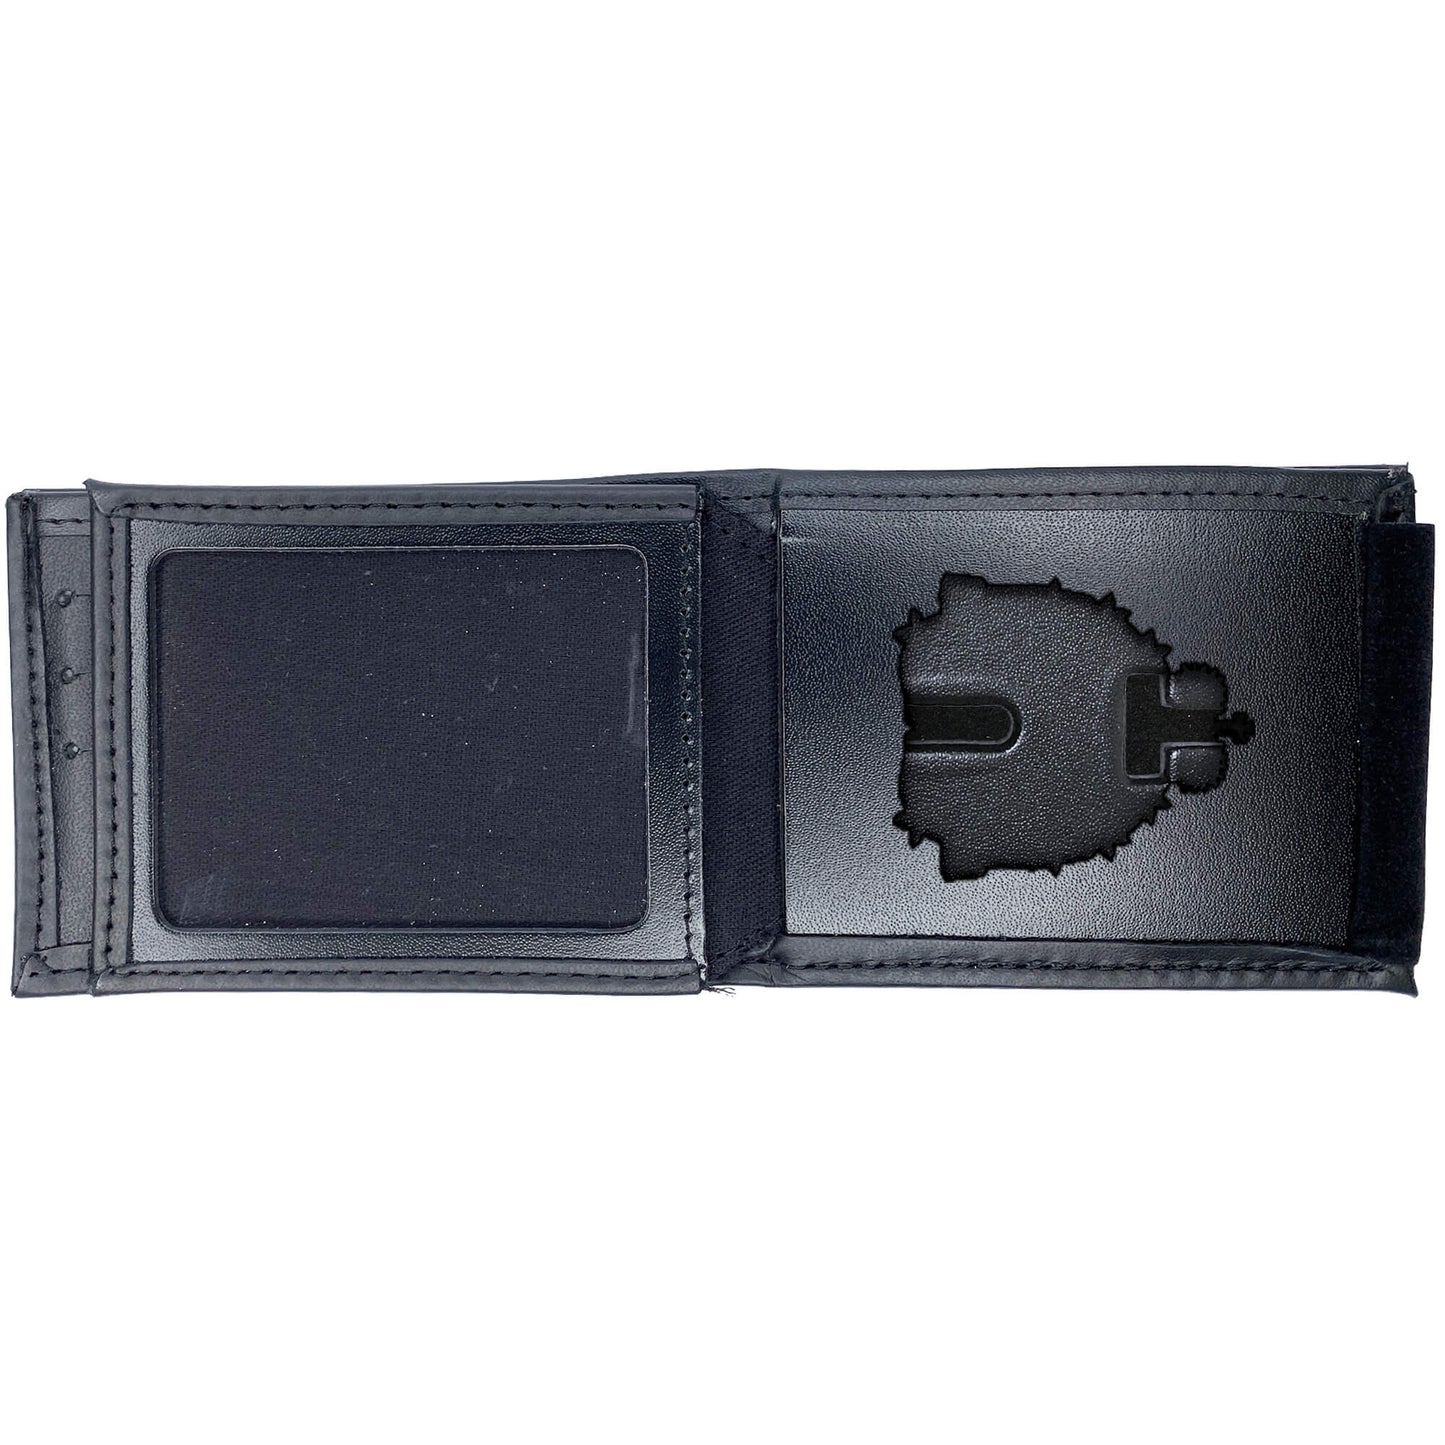 Sask Public Safety Hidden Badge Wallet